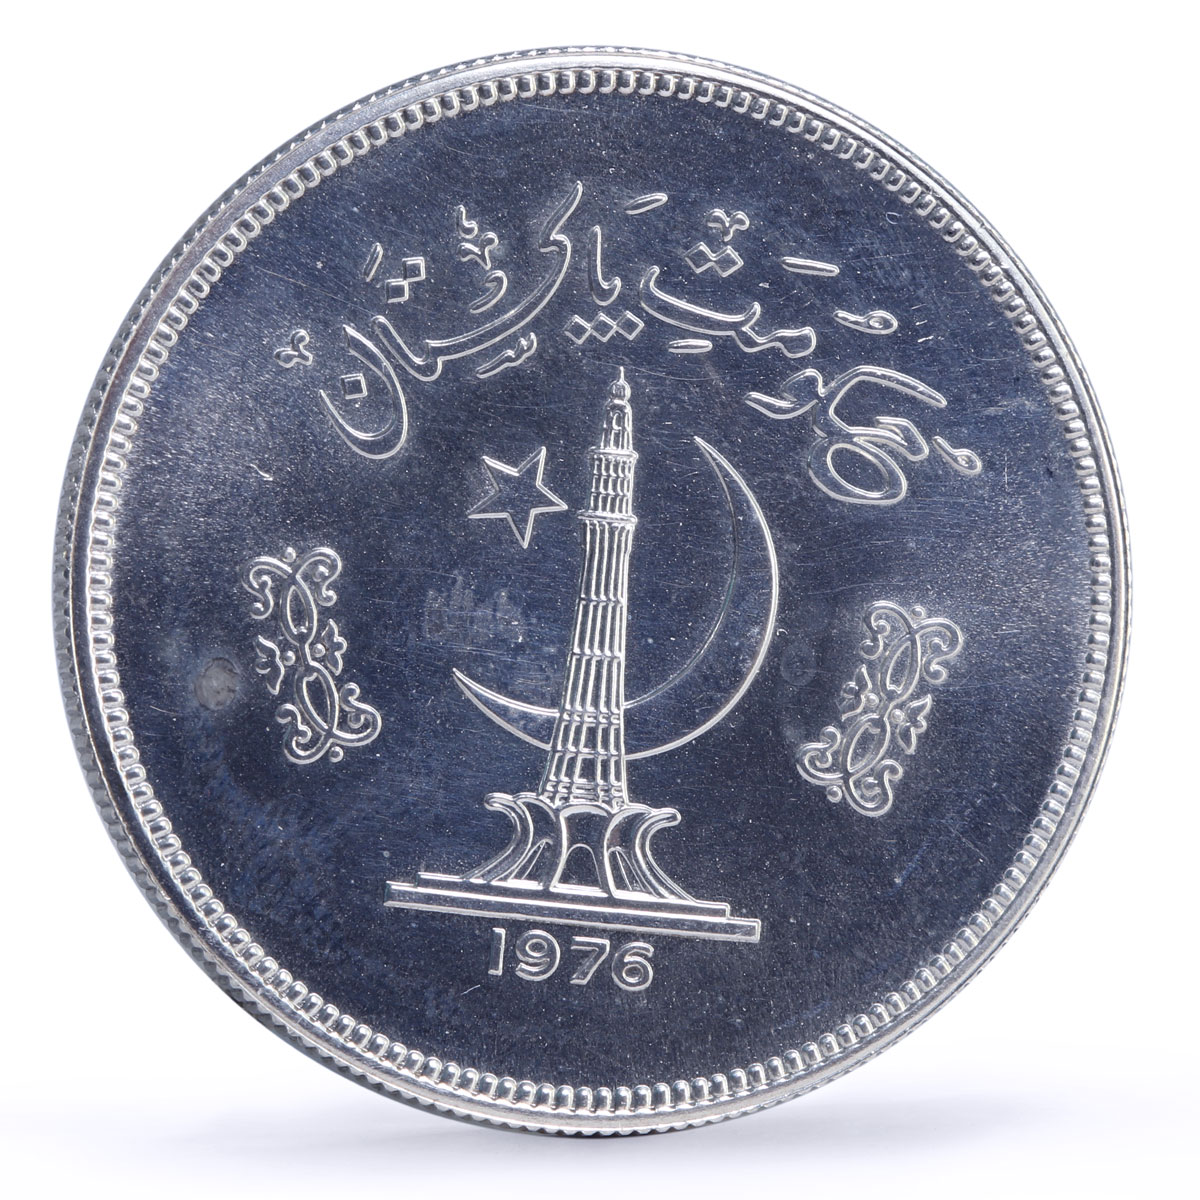 Pakistan 100 rupees WWF Tragopan Pheasant Bird Fauna silver coin 1976